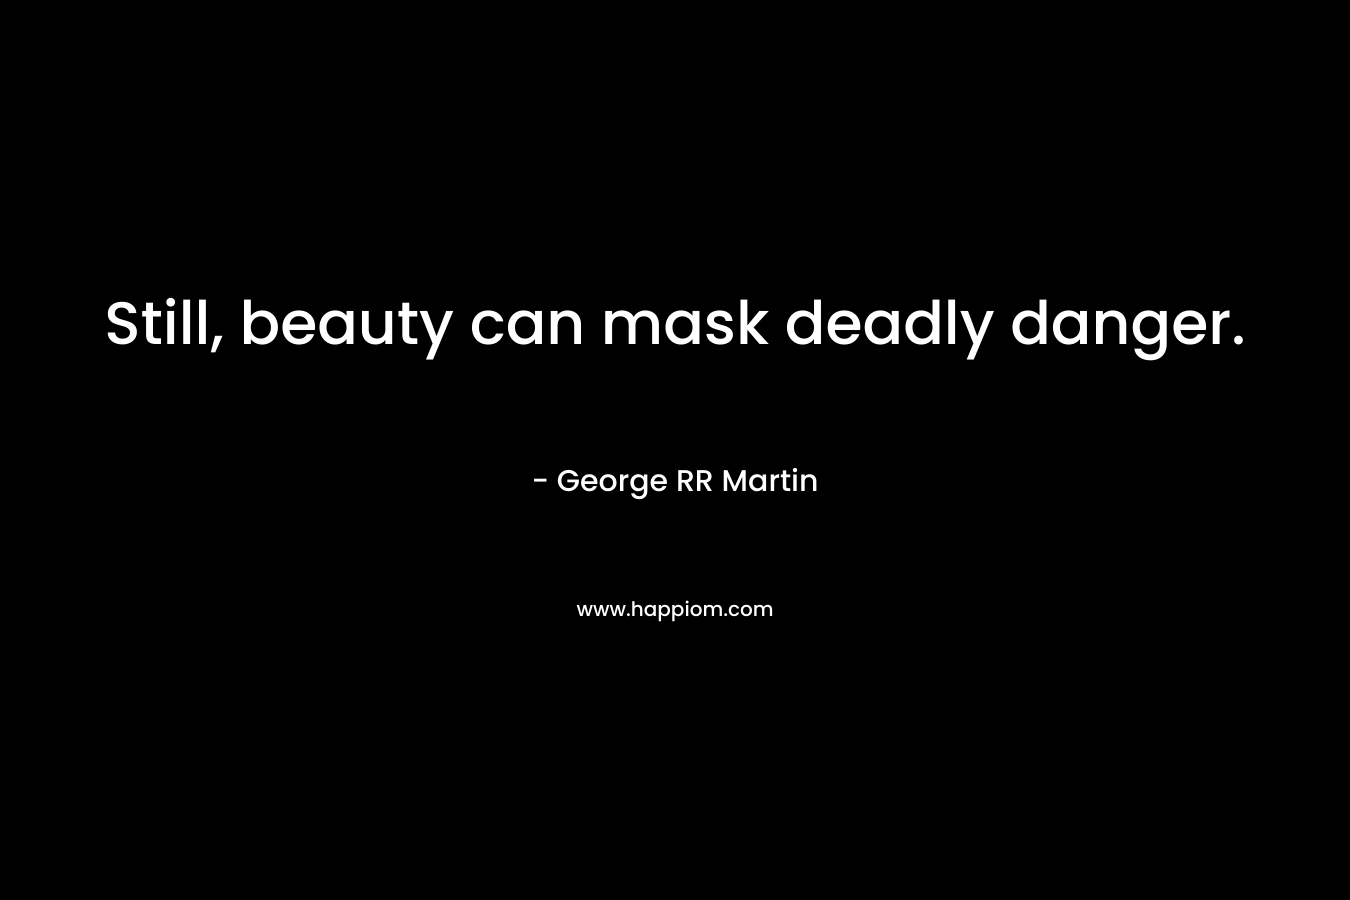 Still, beauty can mask deadly danger.